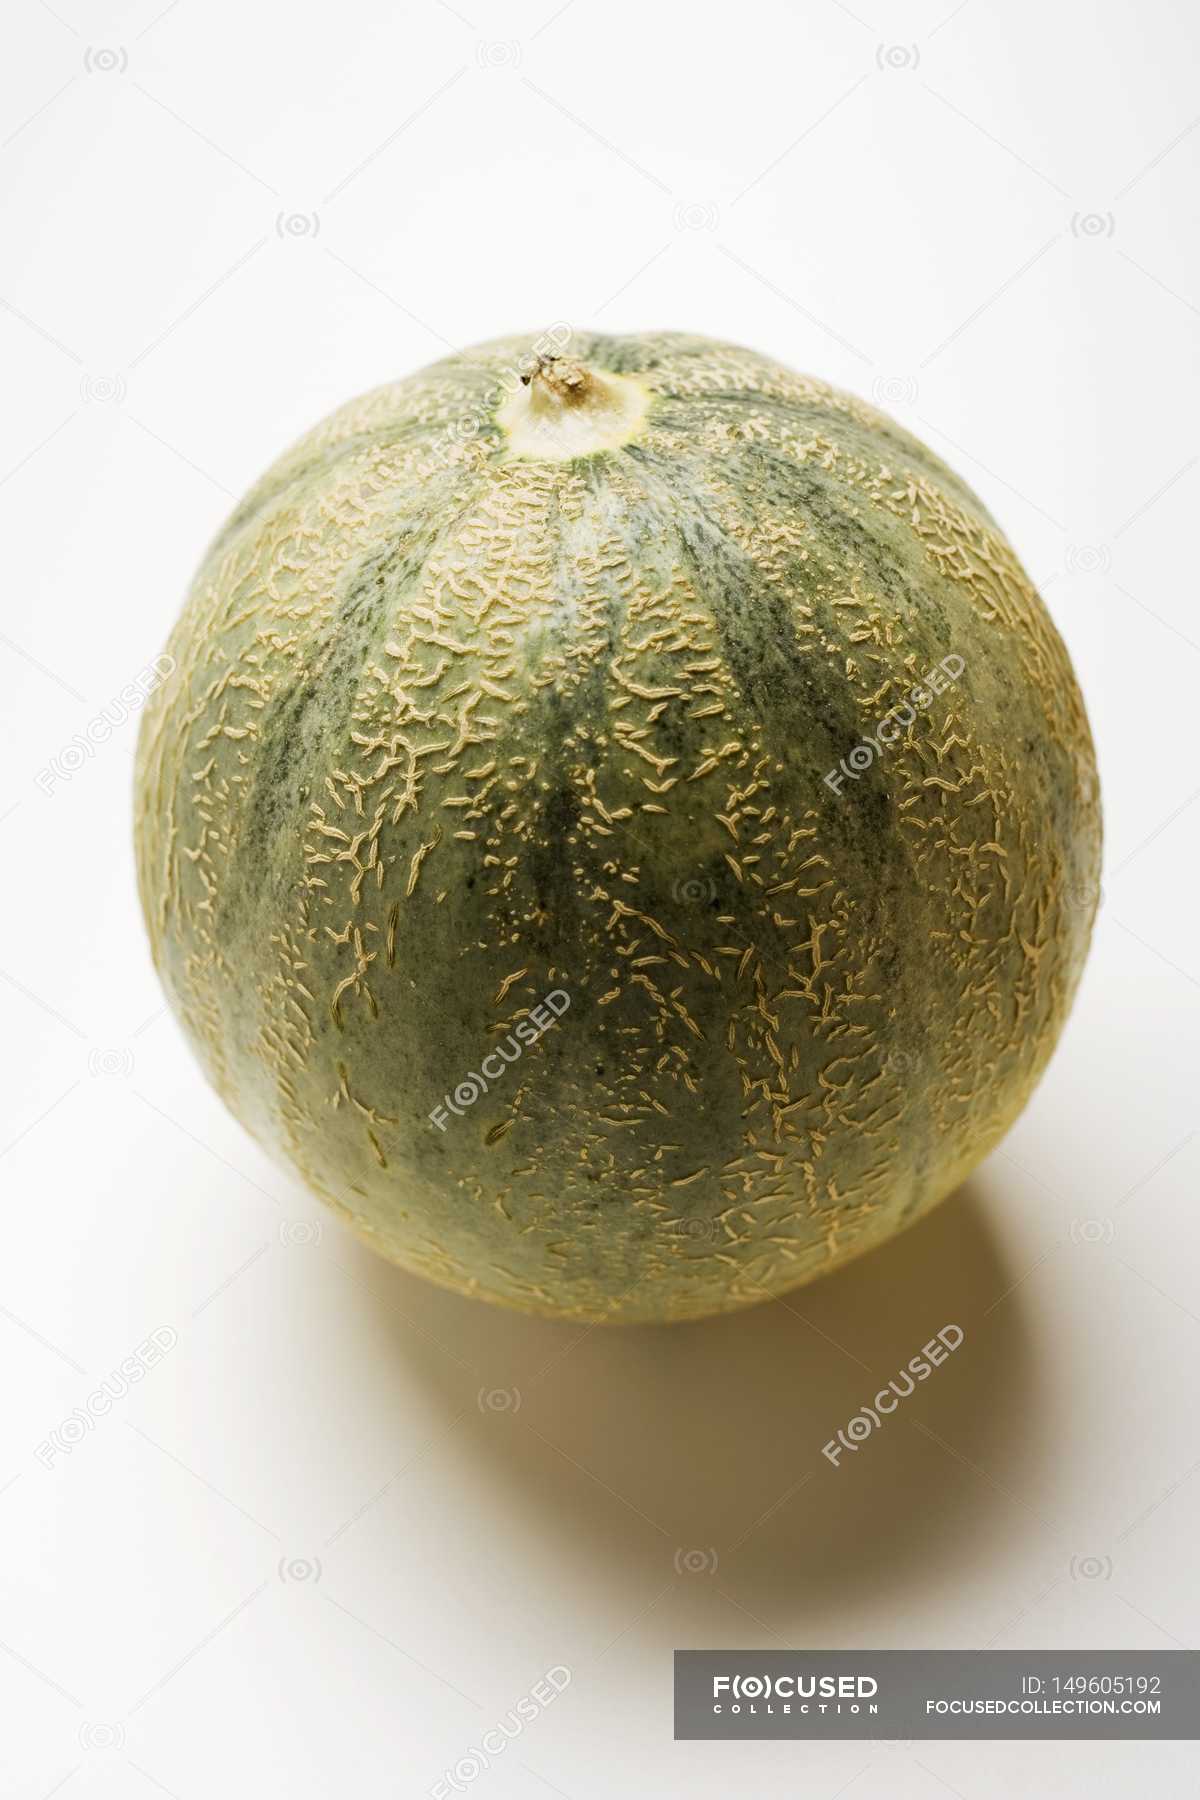 Fresh Galia melon — Stock Photo | #149605192